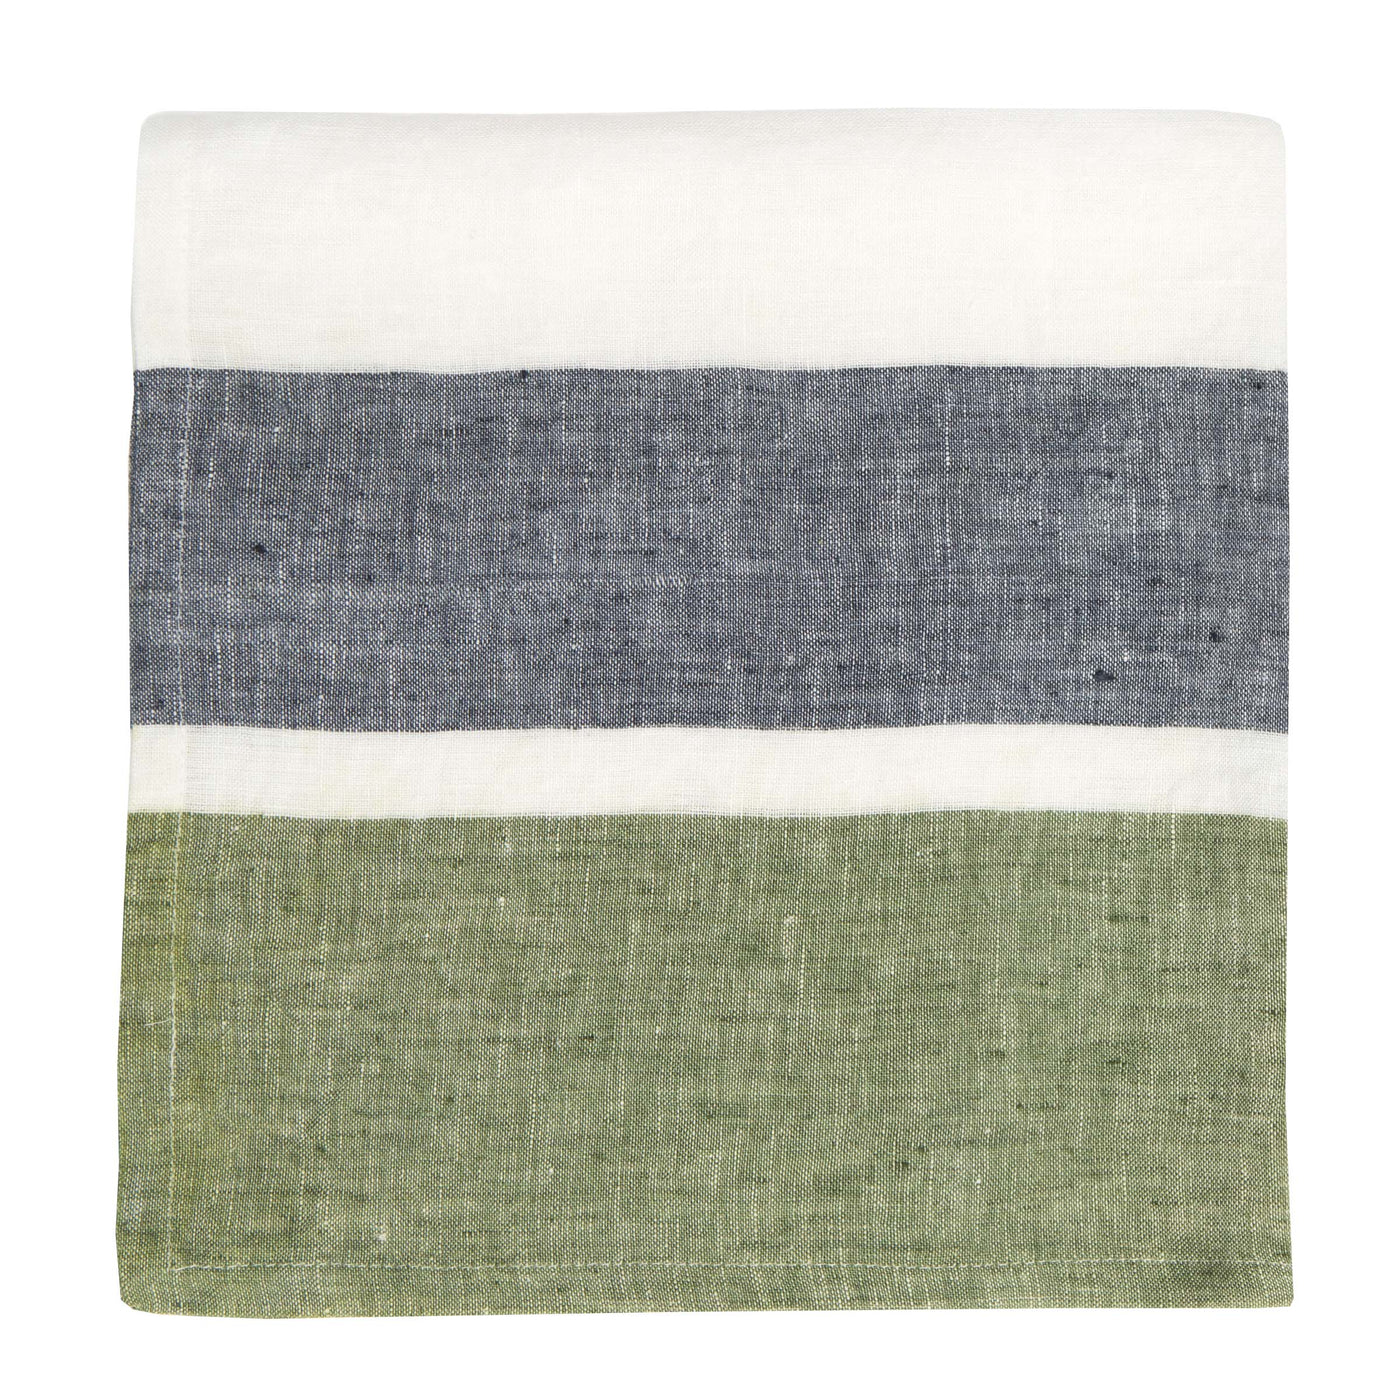 Bold Stripe Linen Evergreen Napkins - Set of 4